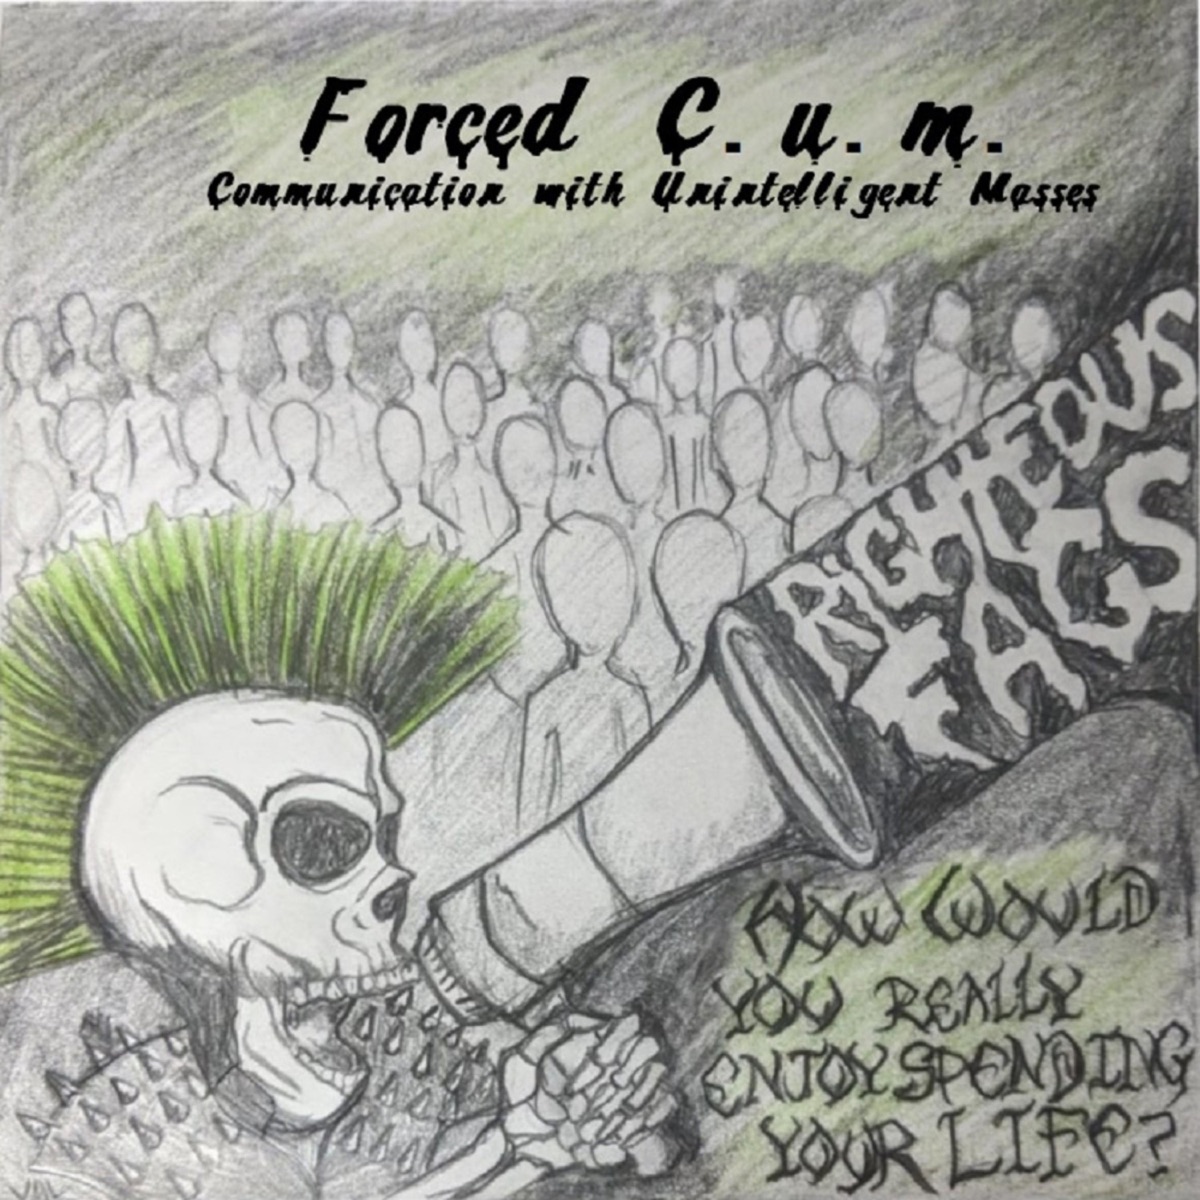 Forced C.U.M. (Communication With Unintelligent Masses) - Album by Rxf -  Apple Music